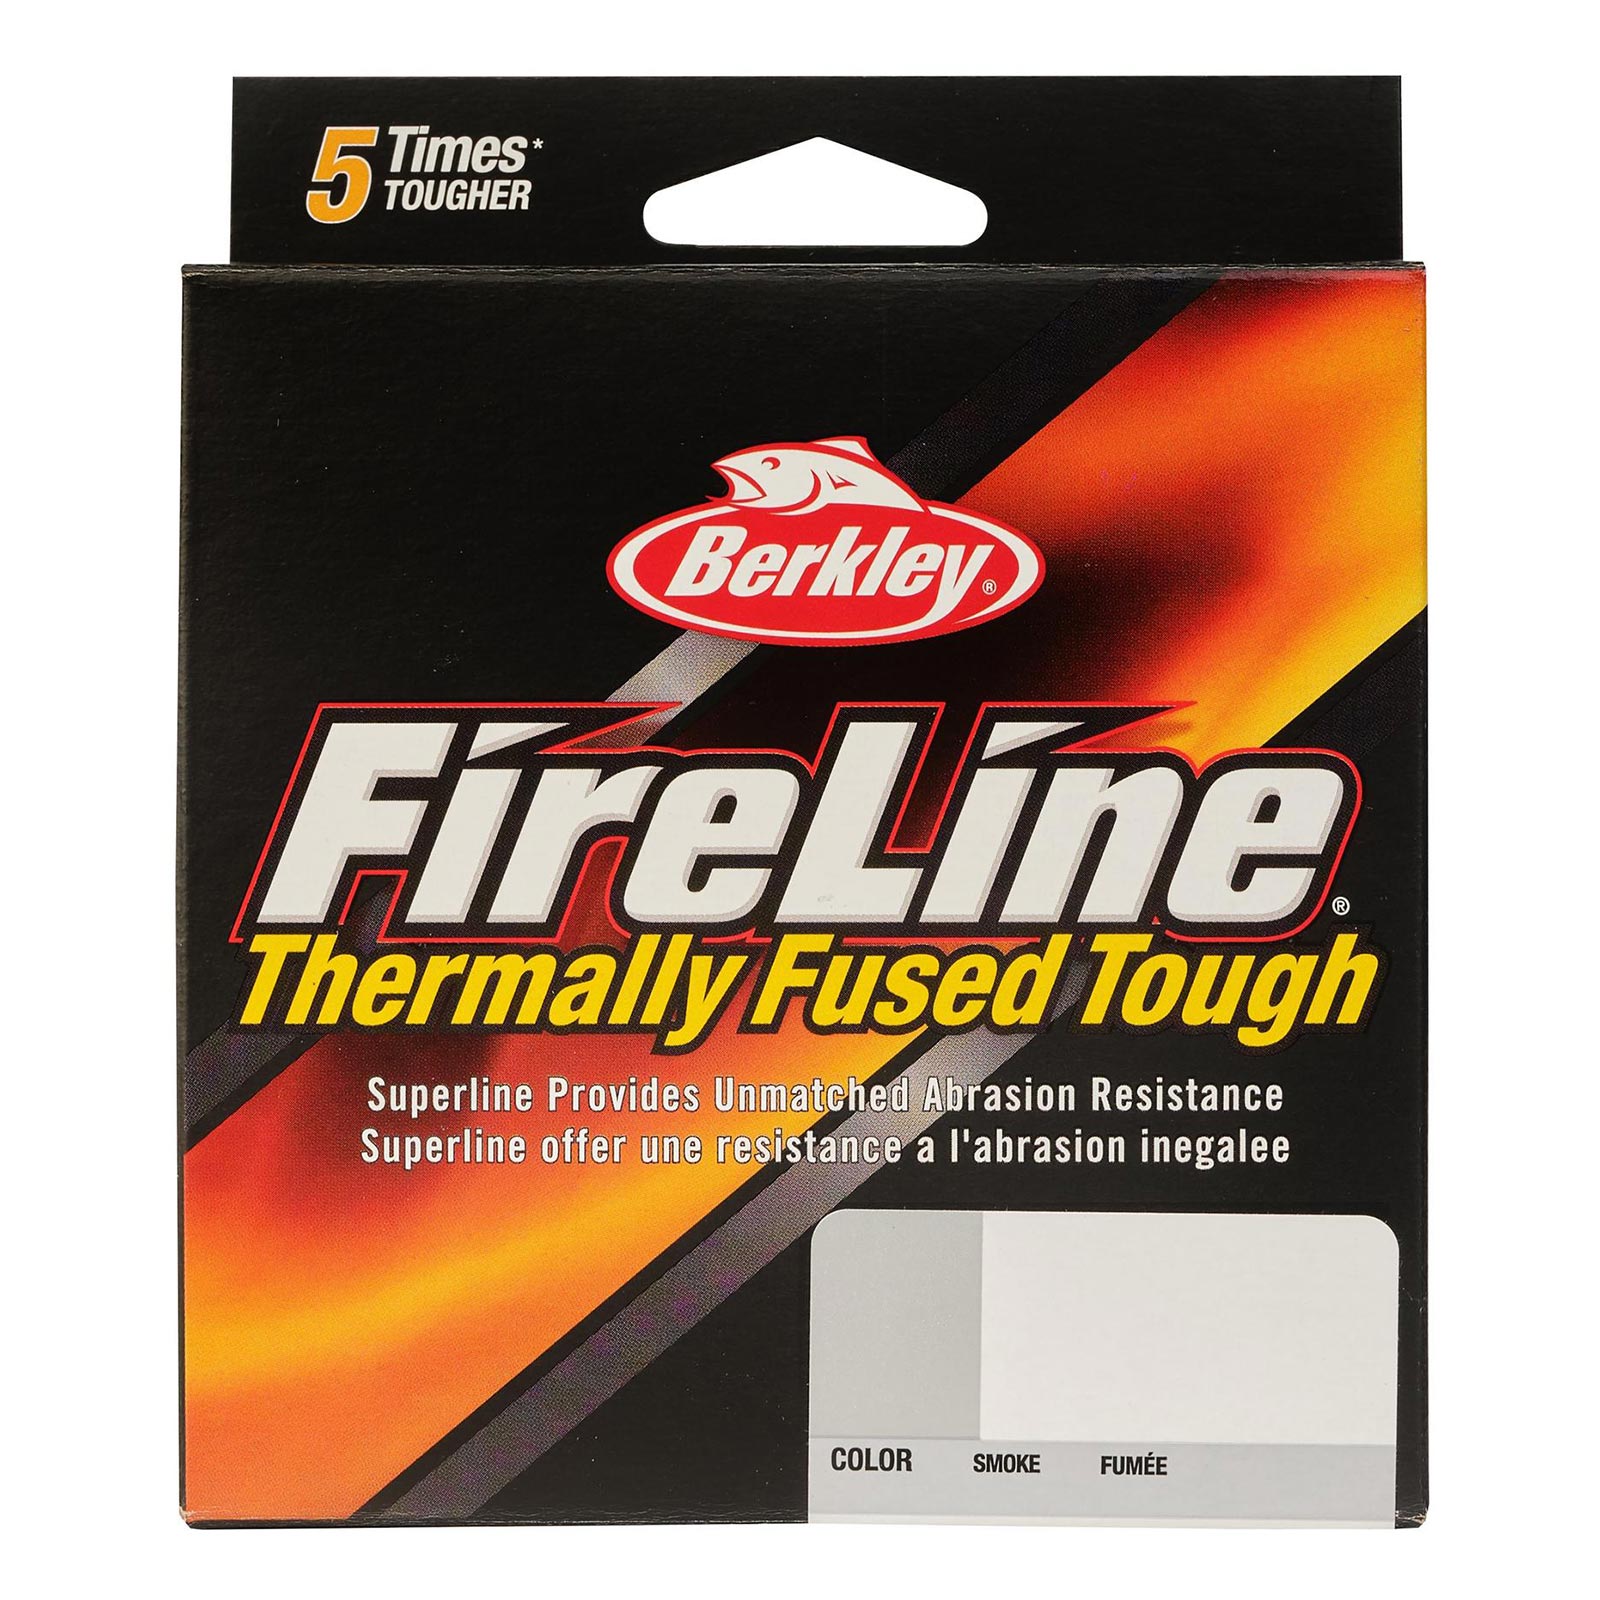 Berkley FireLine Fused Superline Smoke 14 lb